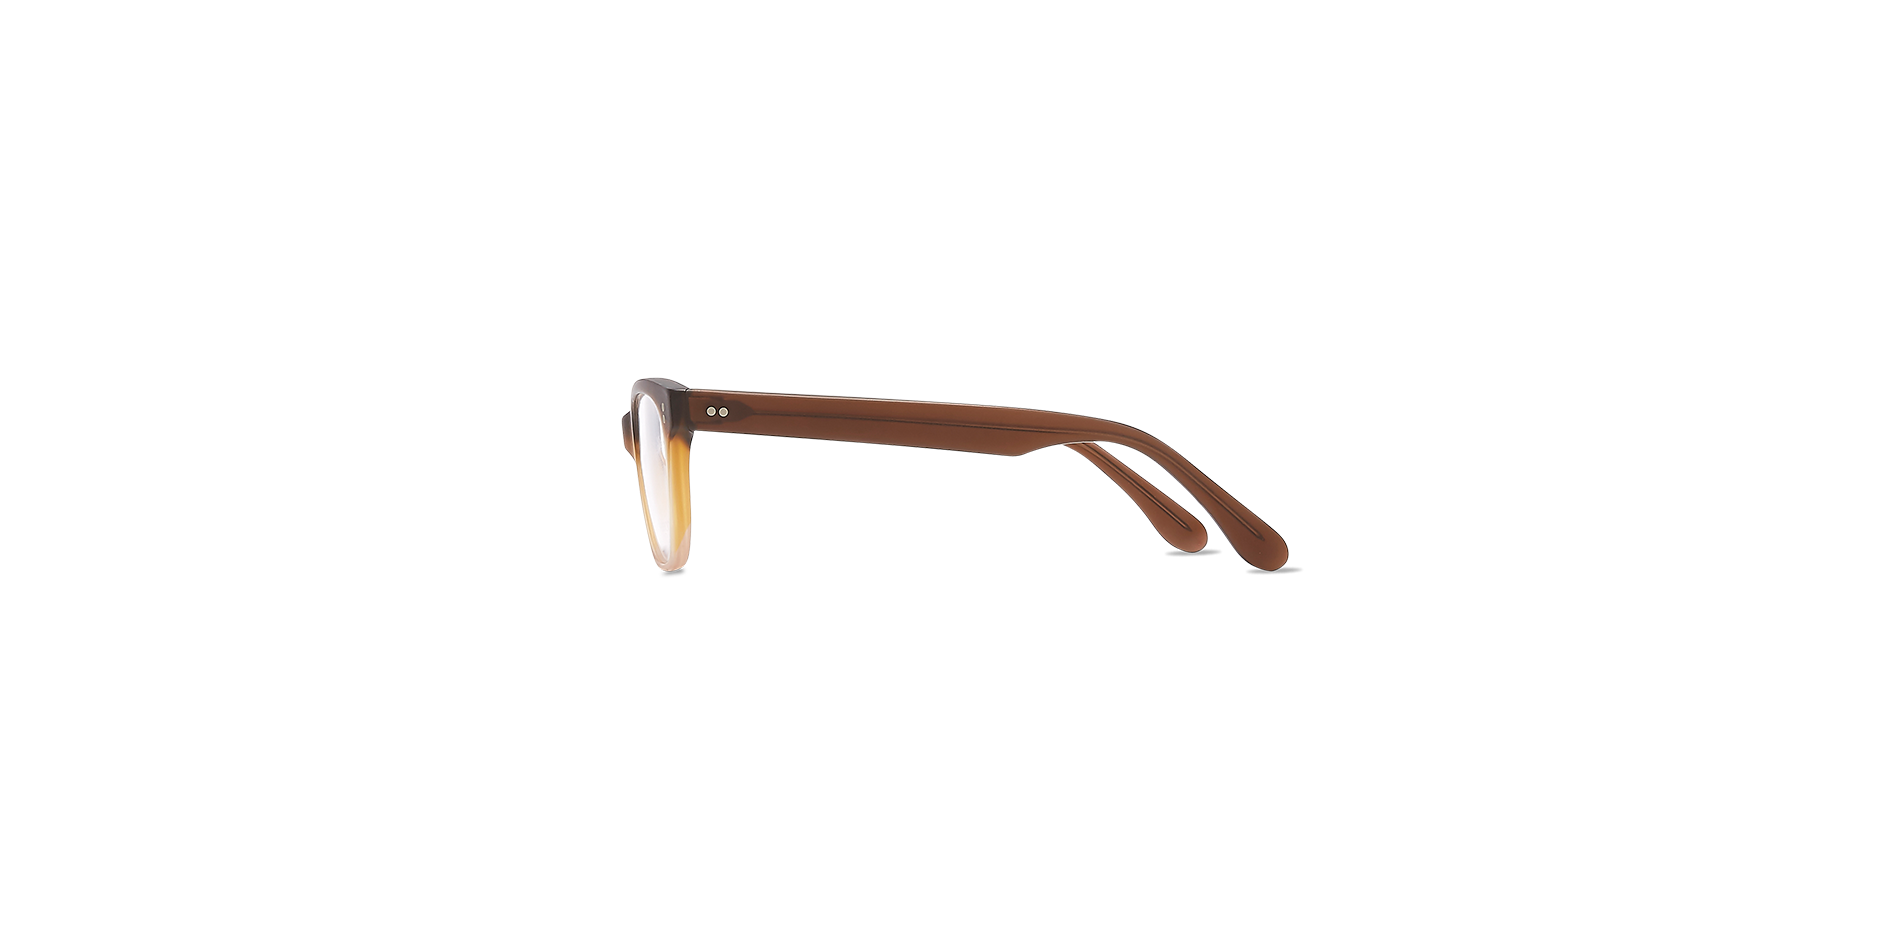 Herren-Korrektionsbrille aus Acetat,  OBRA 586 CL